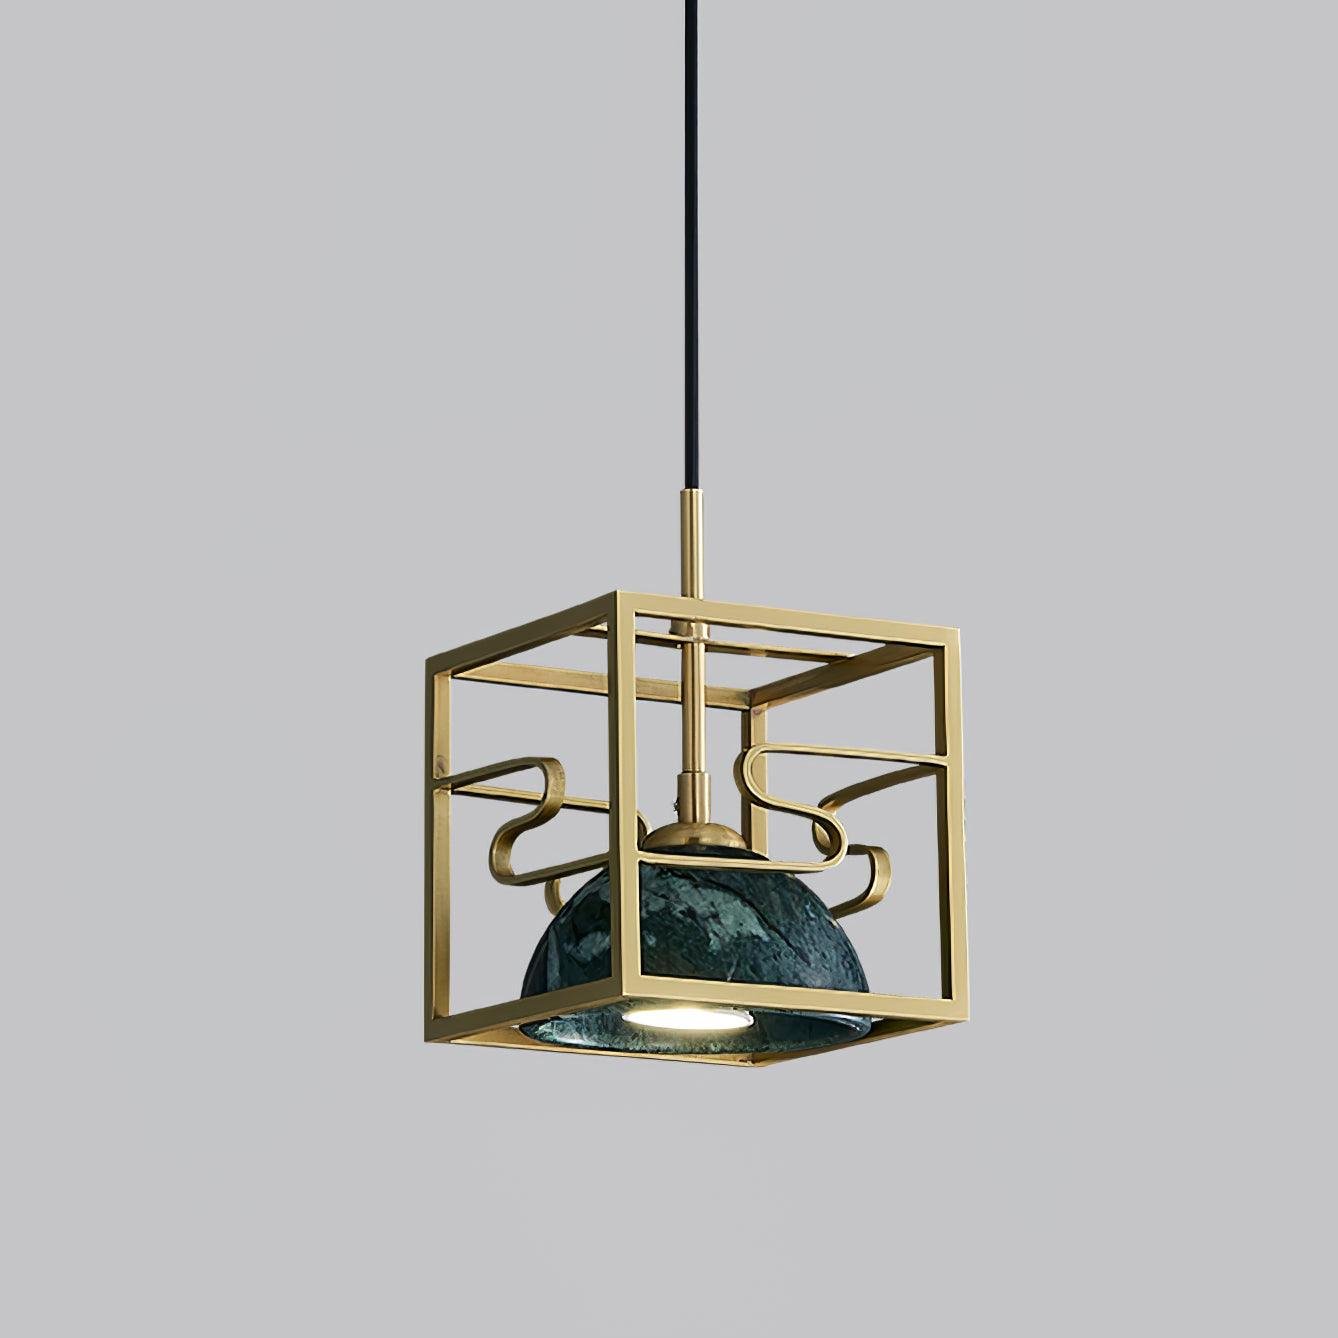 Lantern Square Pendant Lamp Model B ∅ 7.8″ x H 7.8″ , Dia 20cm x H 20cm , Polished Brass+Green Marble